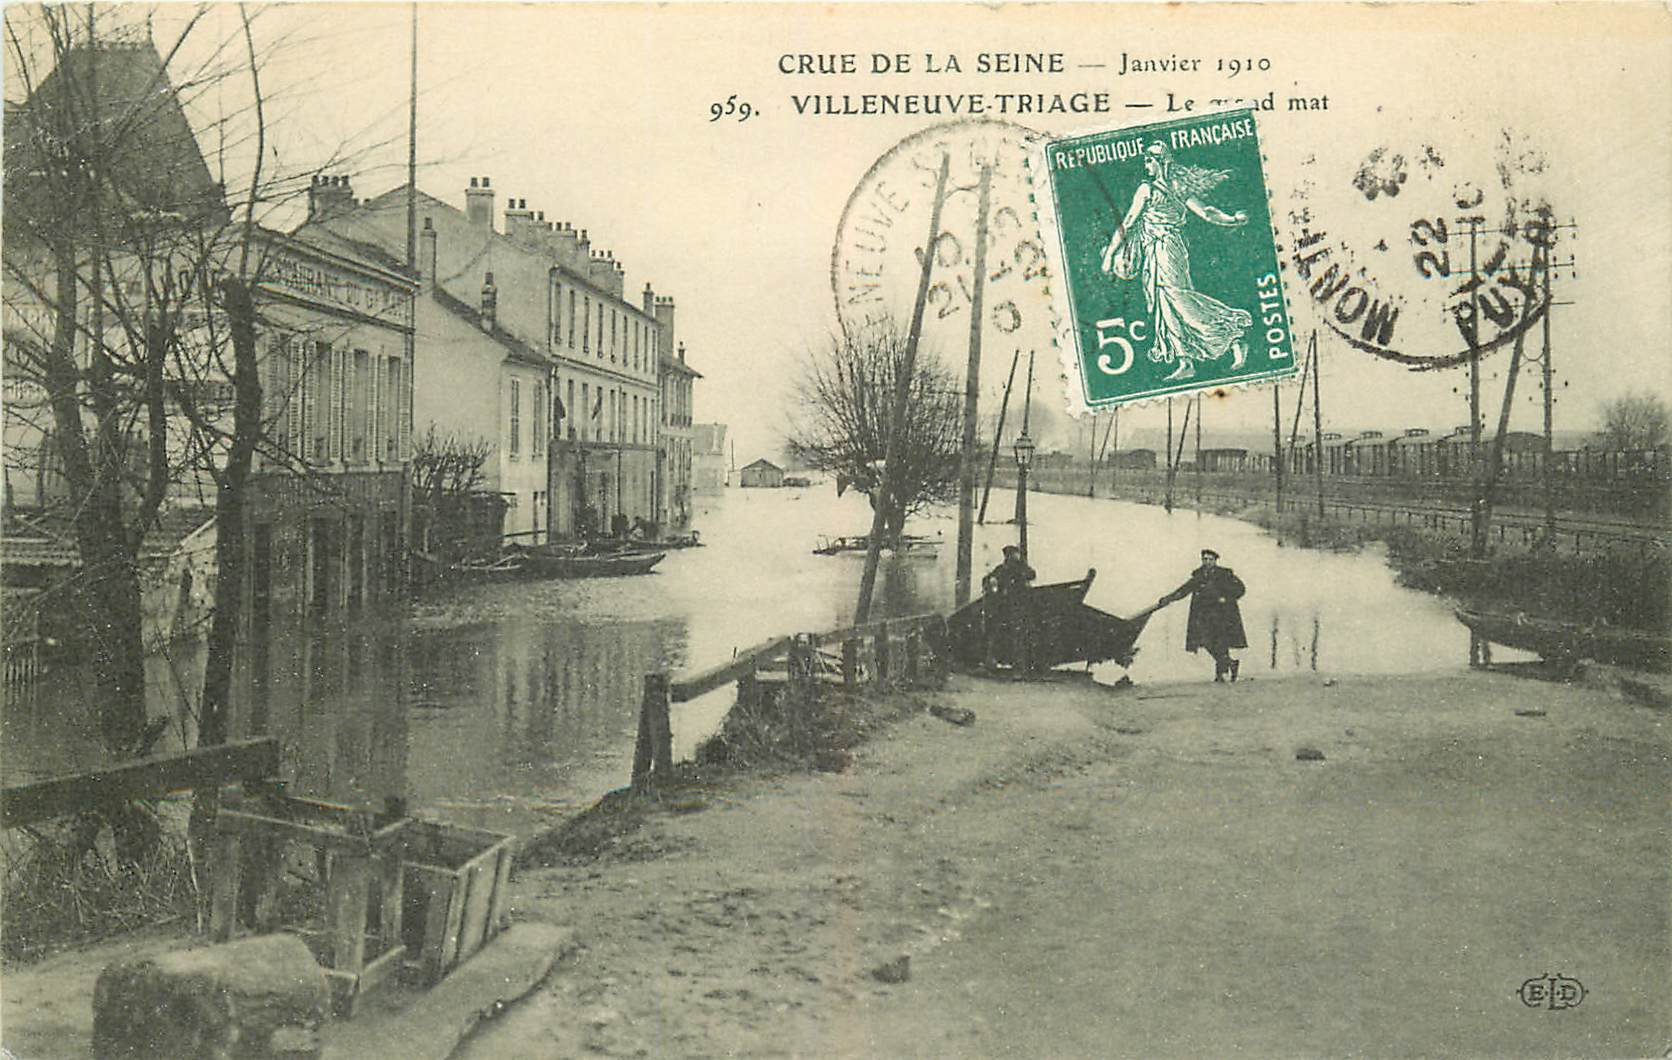 WW 94 VILLENEUVE-TRIAGE. Inondation Crue 1910 le Grand mat